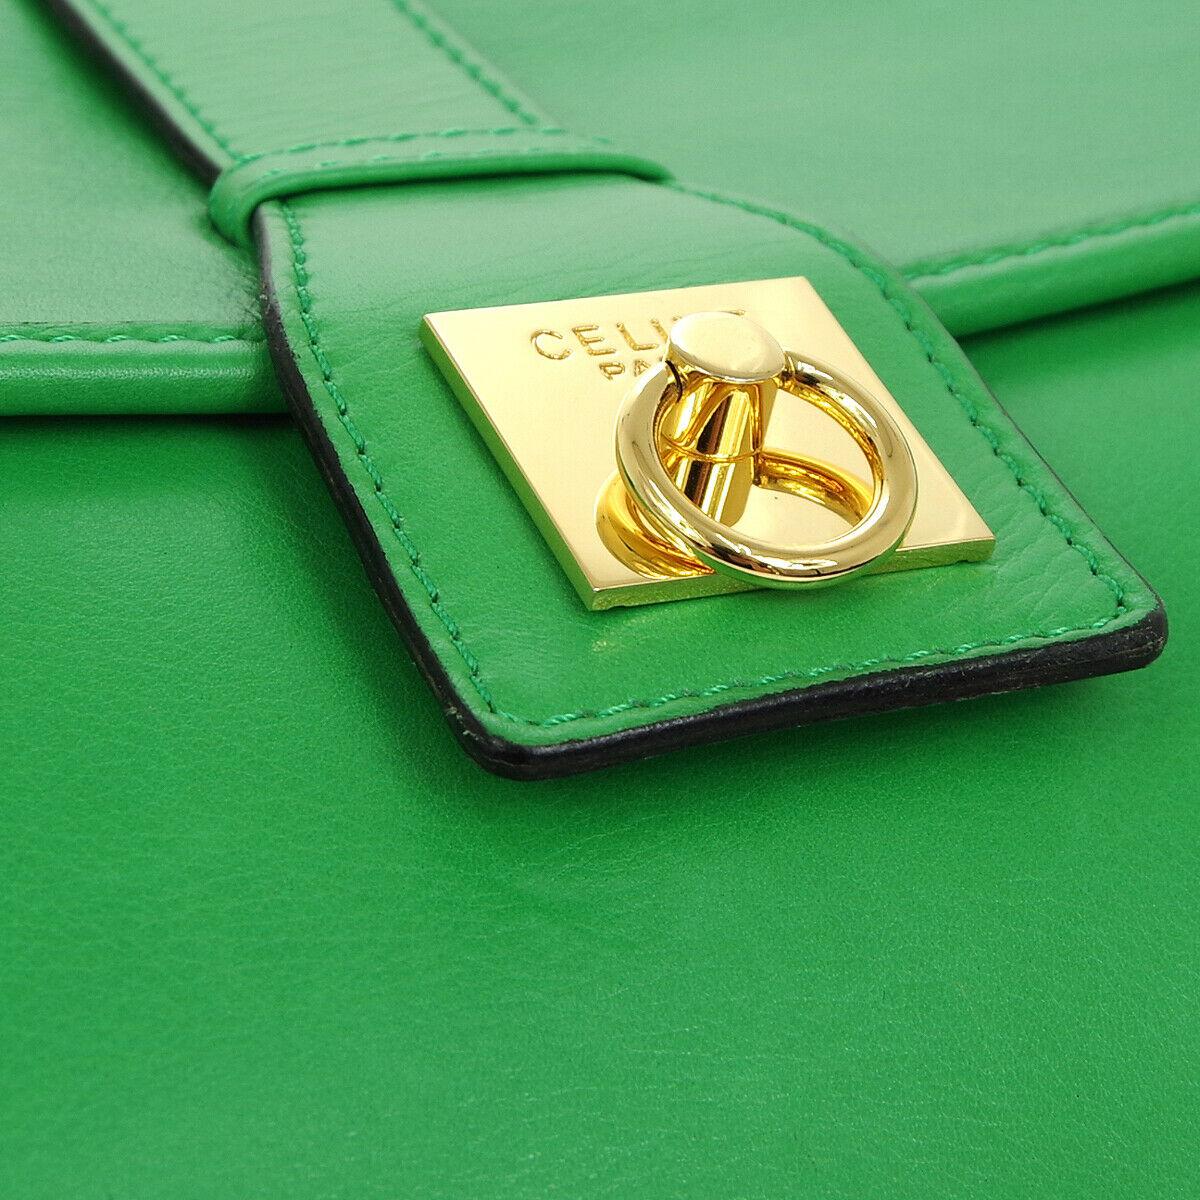 Celine Apple Green Leather Gold Toggle Saddle Shoulder Crossbody Flap Bag

Leather
Gold tone hardware
Leather lining
Made in Italy
Adjustable shoulder strap drop 14.5-16.5